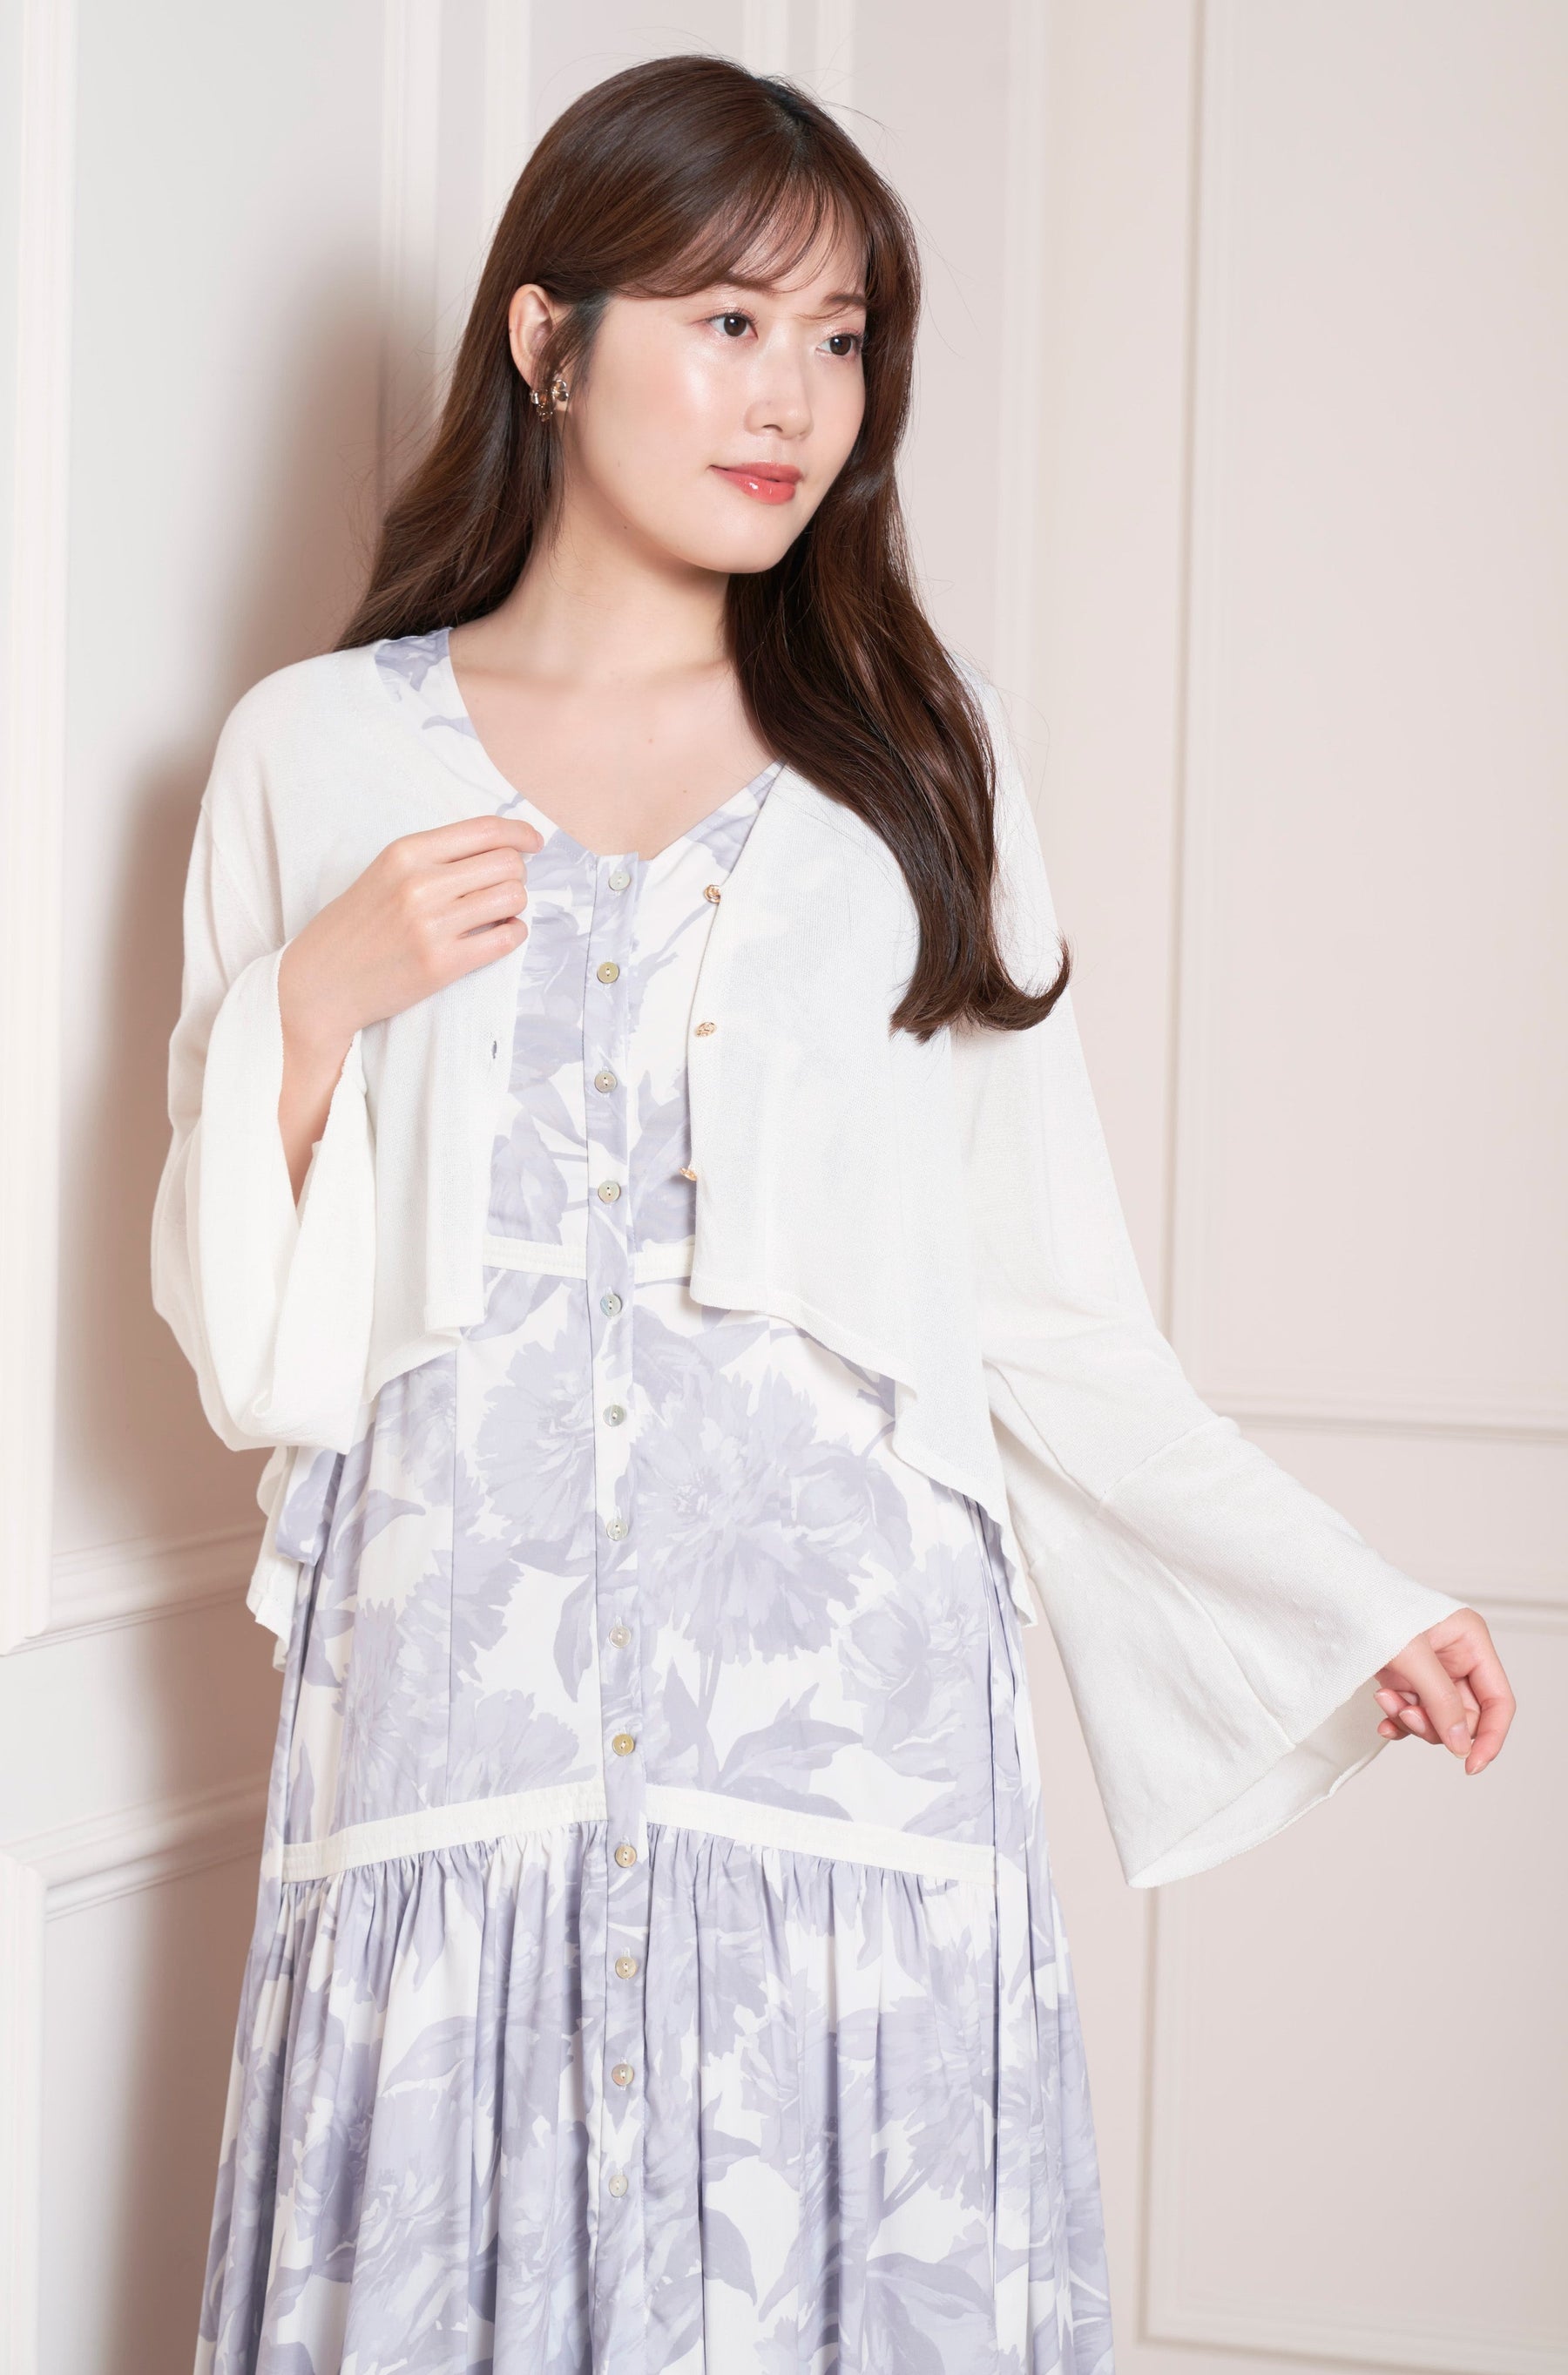 [New color] UV Knit Dress Cardigan